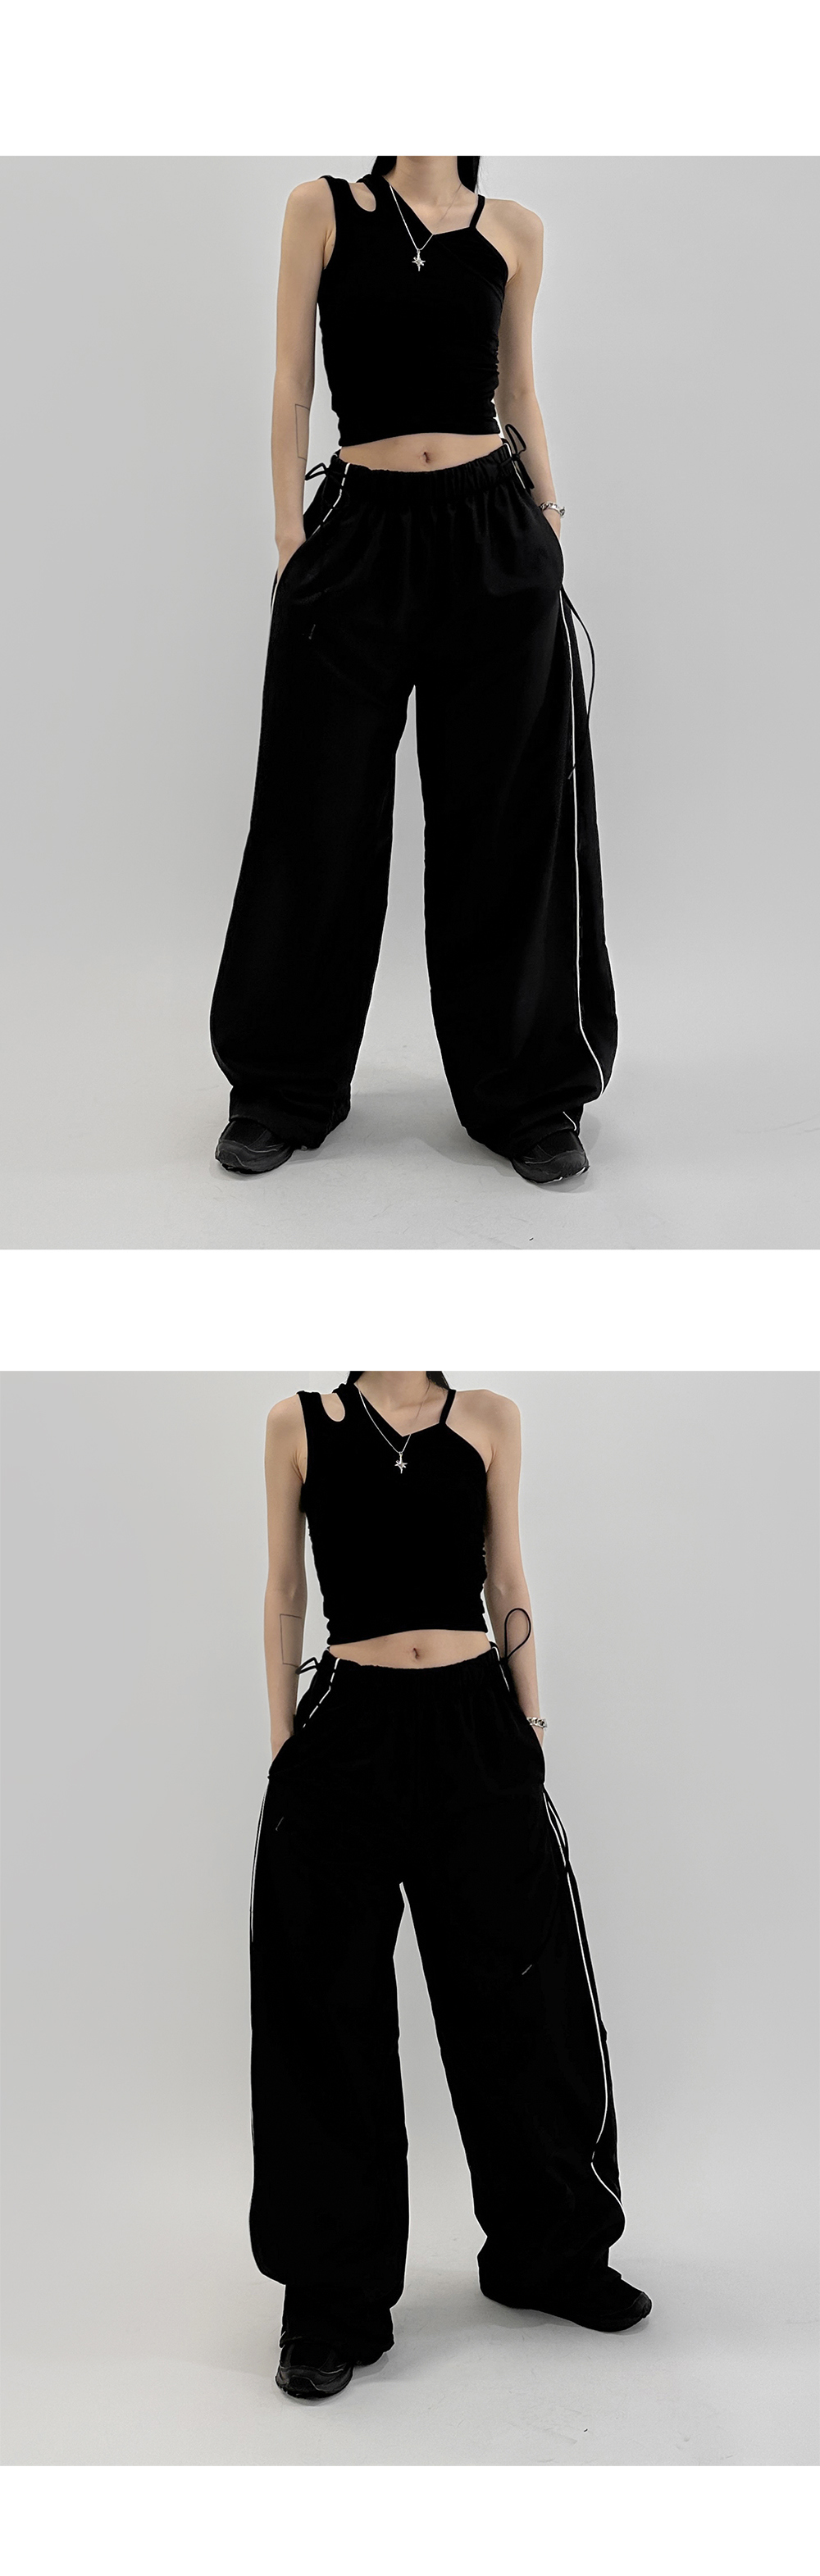 suspenders skirt/pants charcoal color image-S1L5